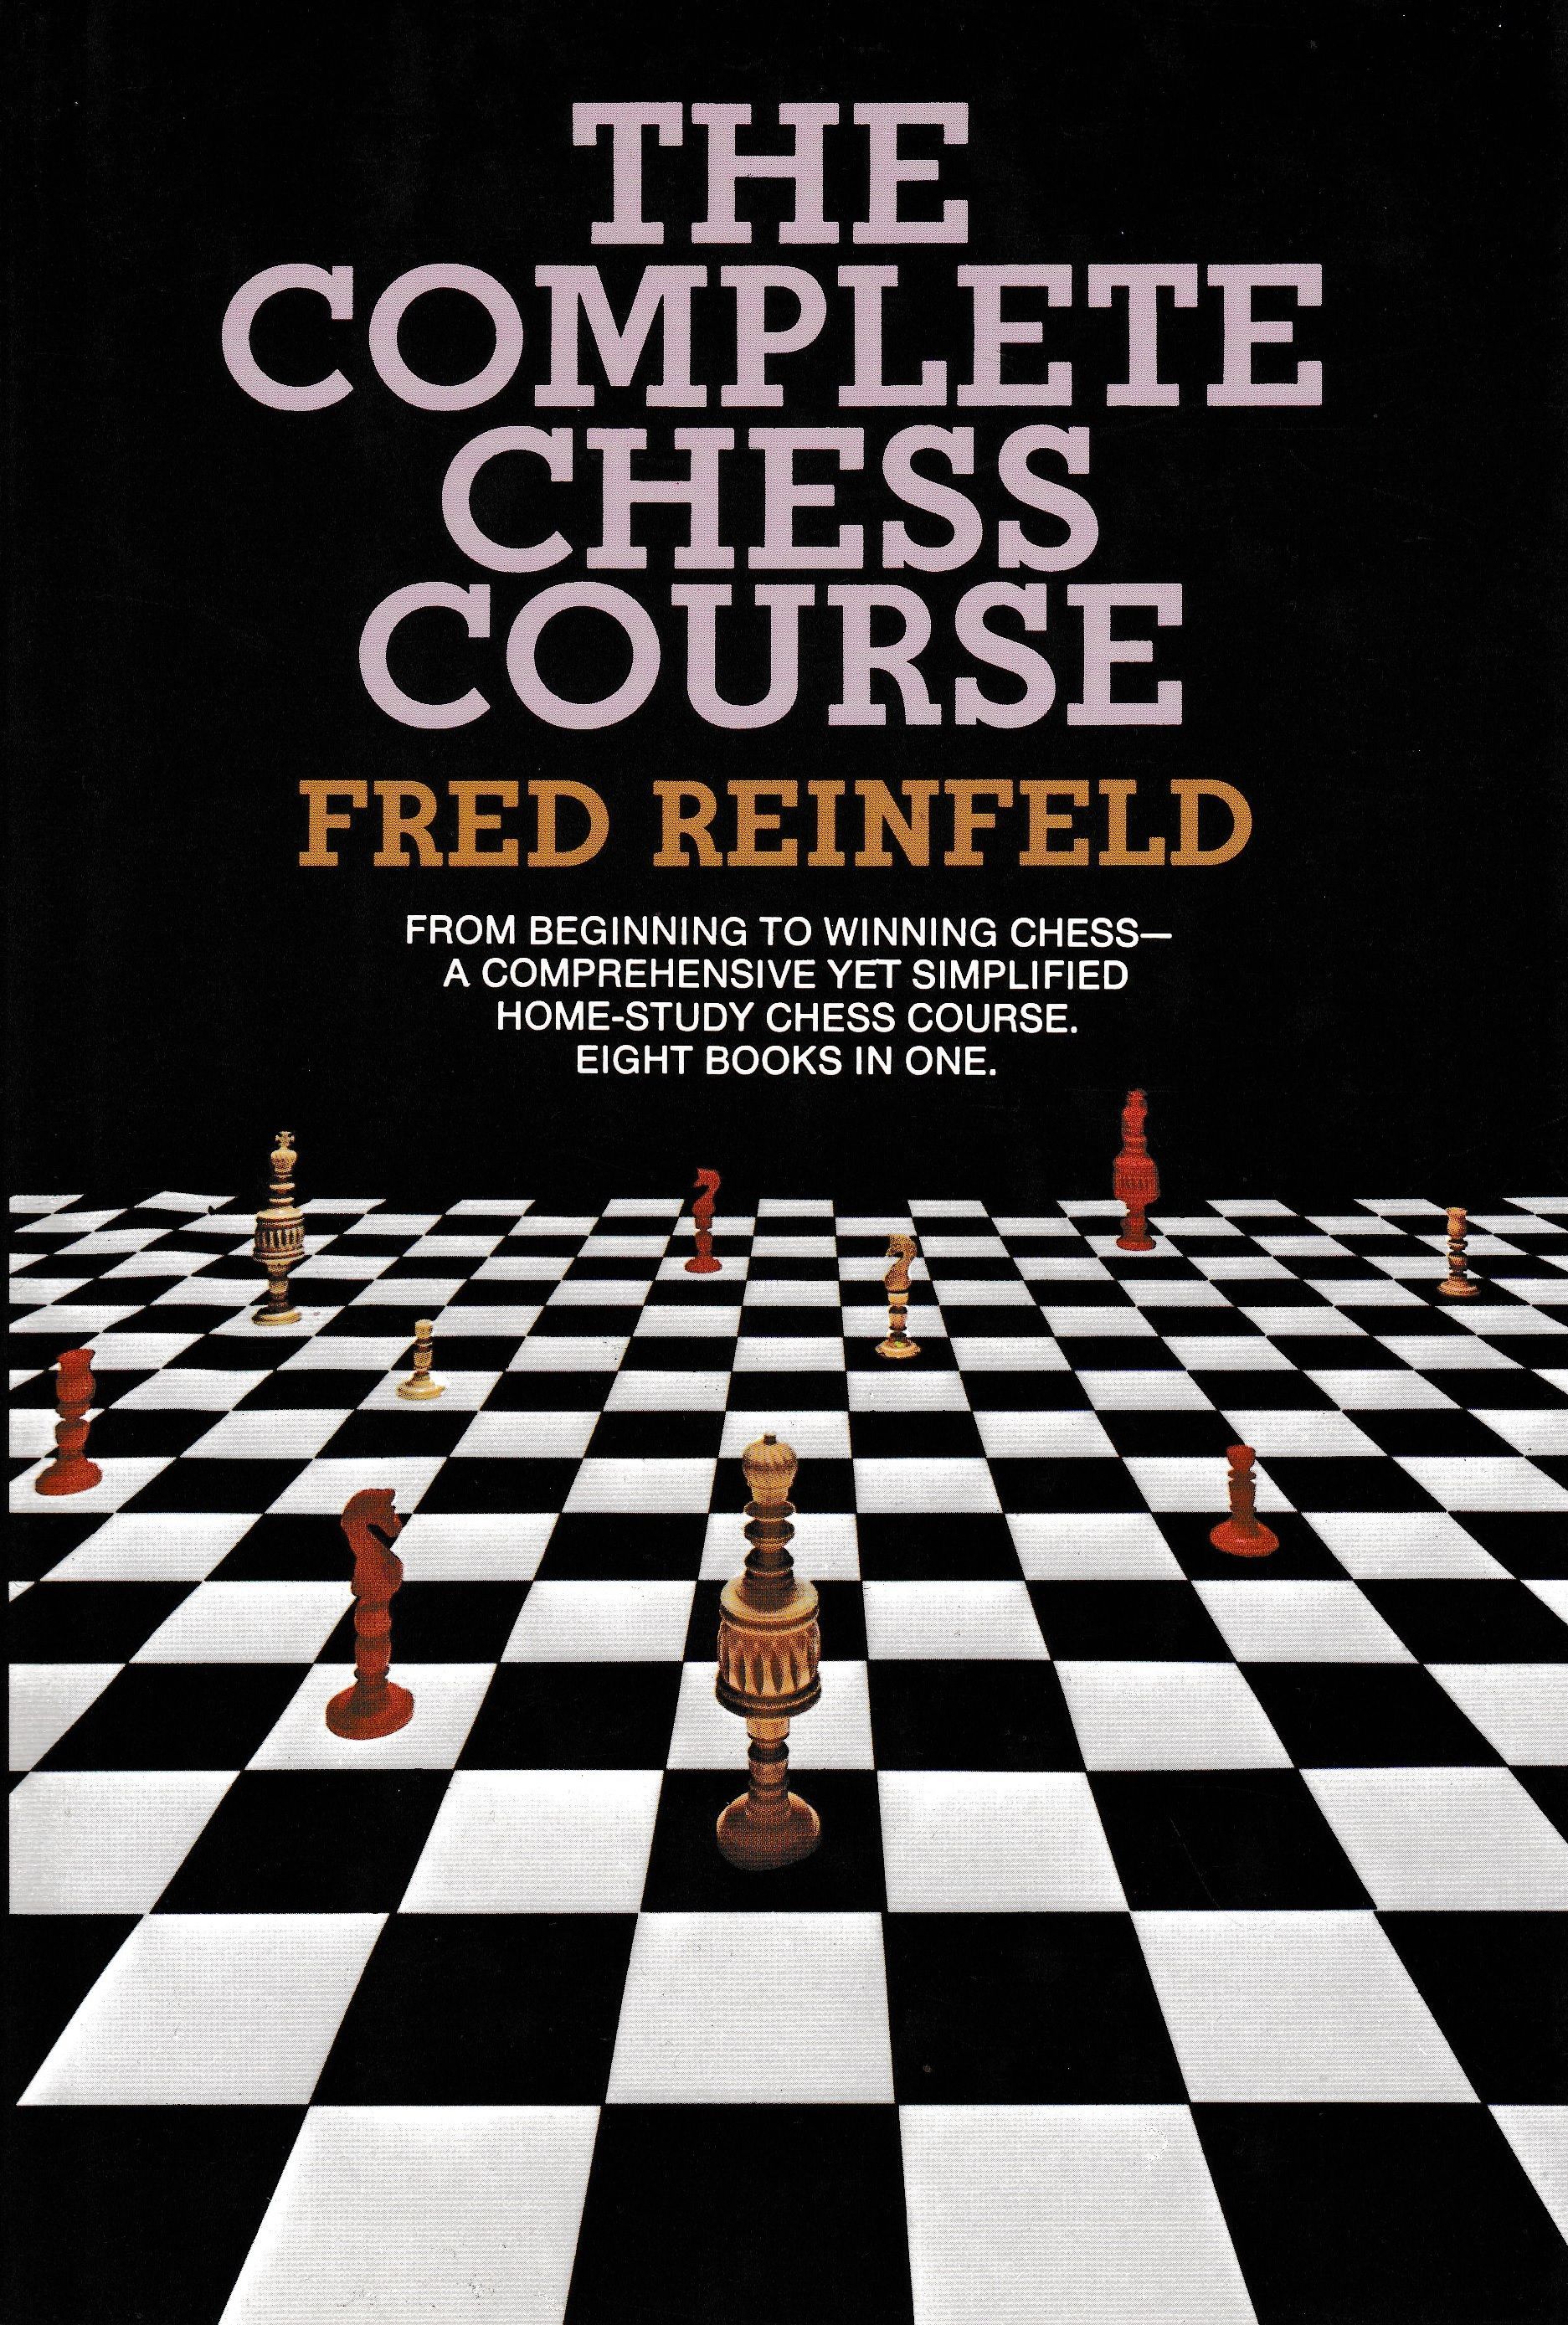 Chess books. Chess courses. Книги о шахматах. Chess book. Шахматы психология.